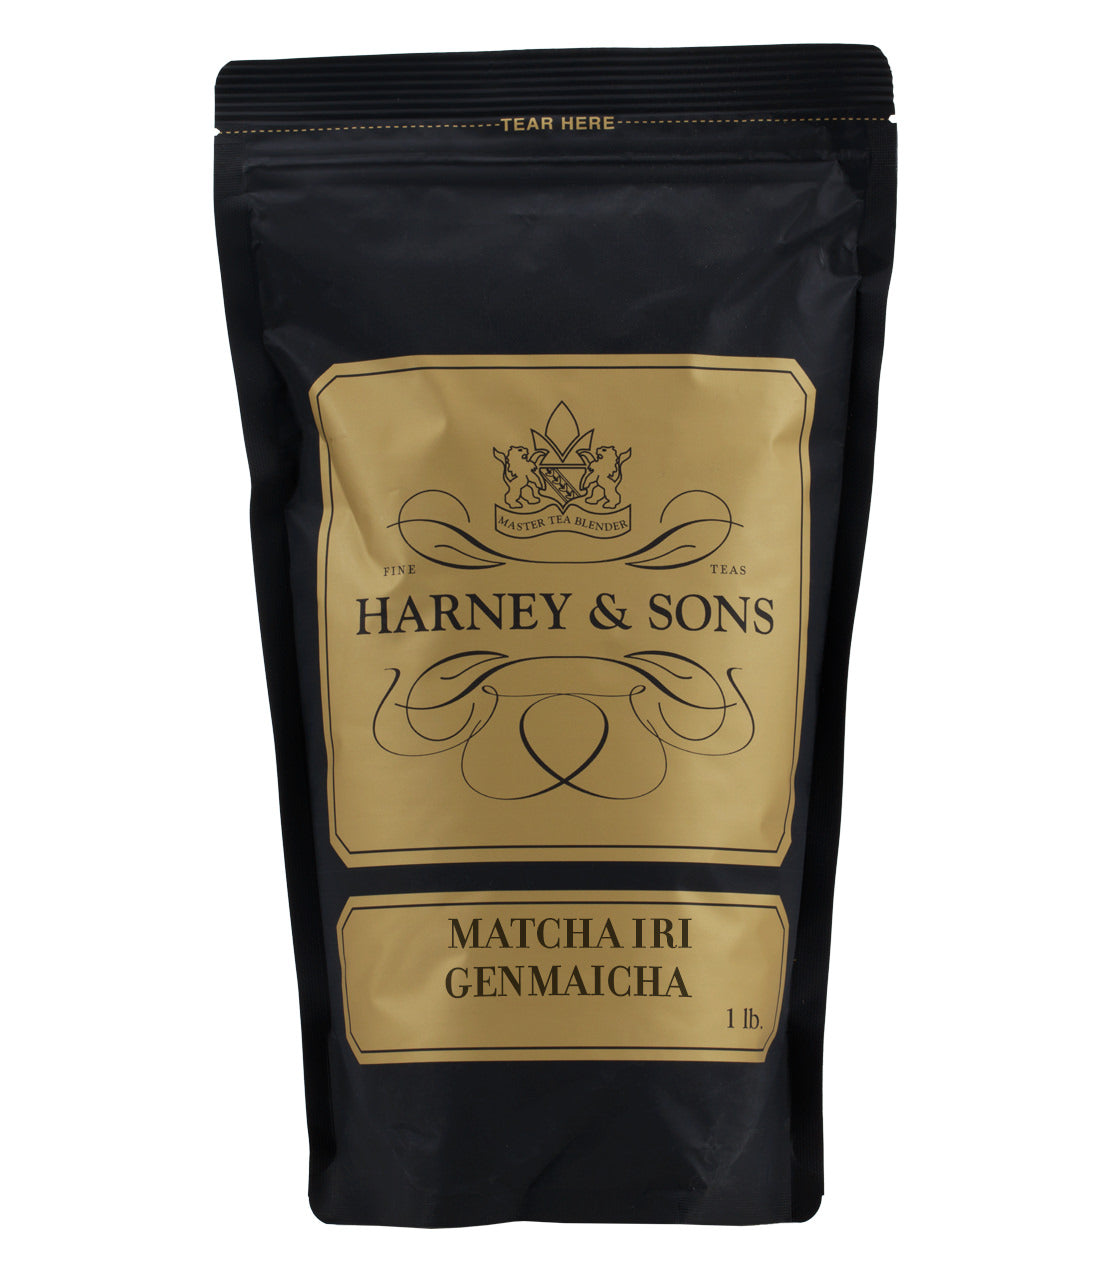 Matcha iri Genmaicha - Loose 1 lb. Bag - Harney & Sons Fine Teas